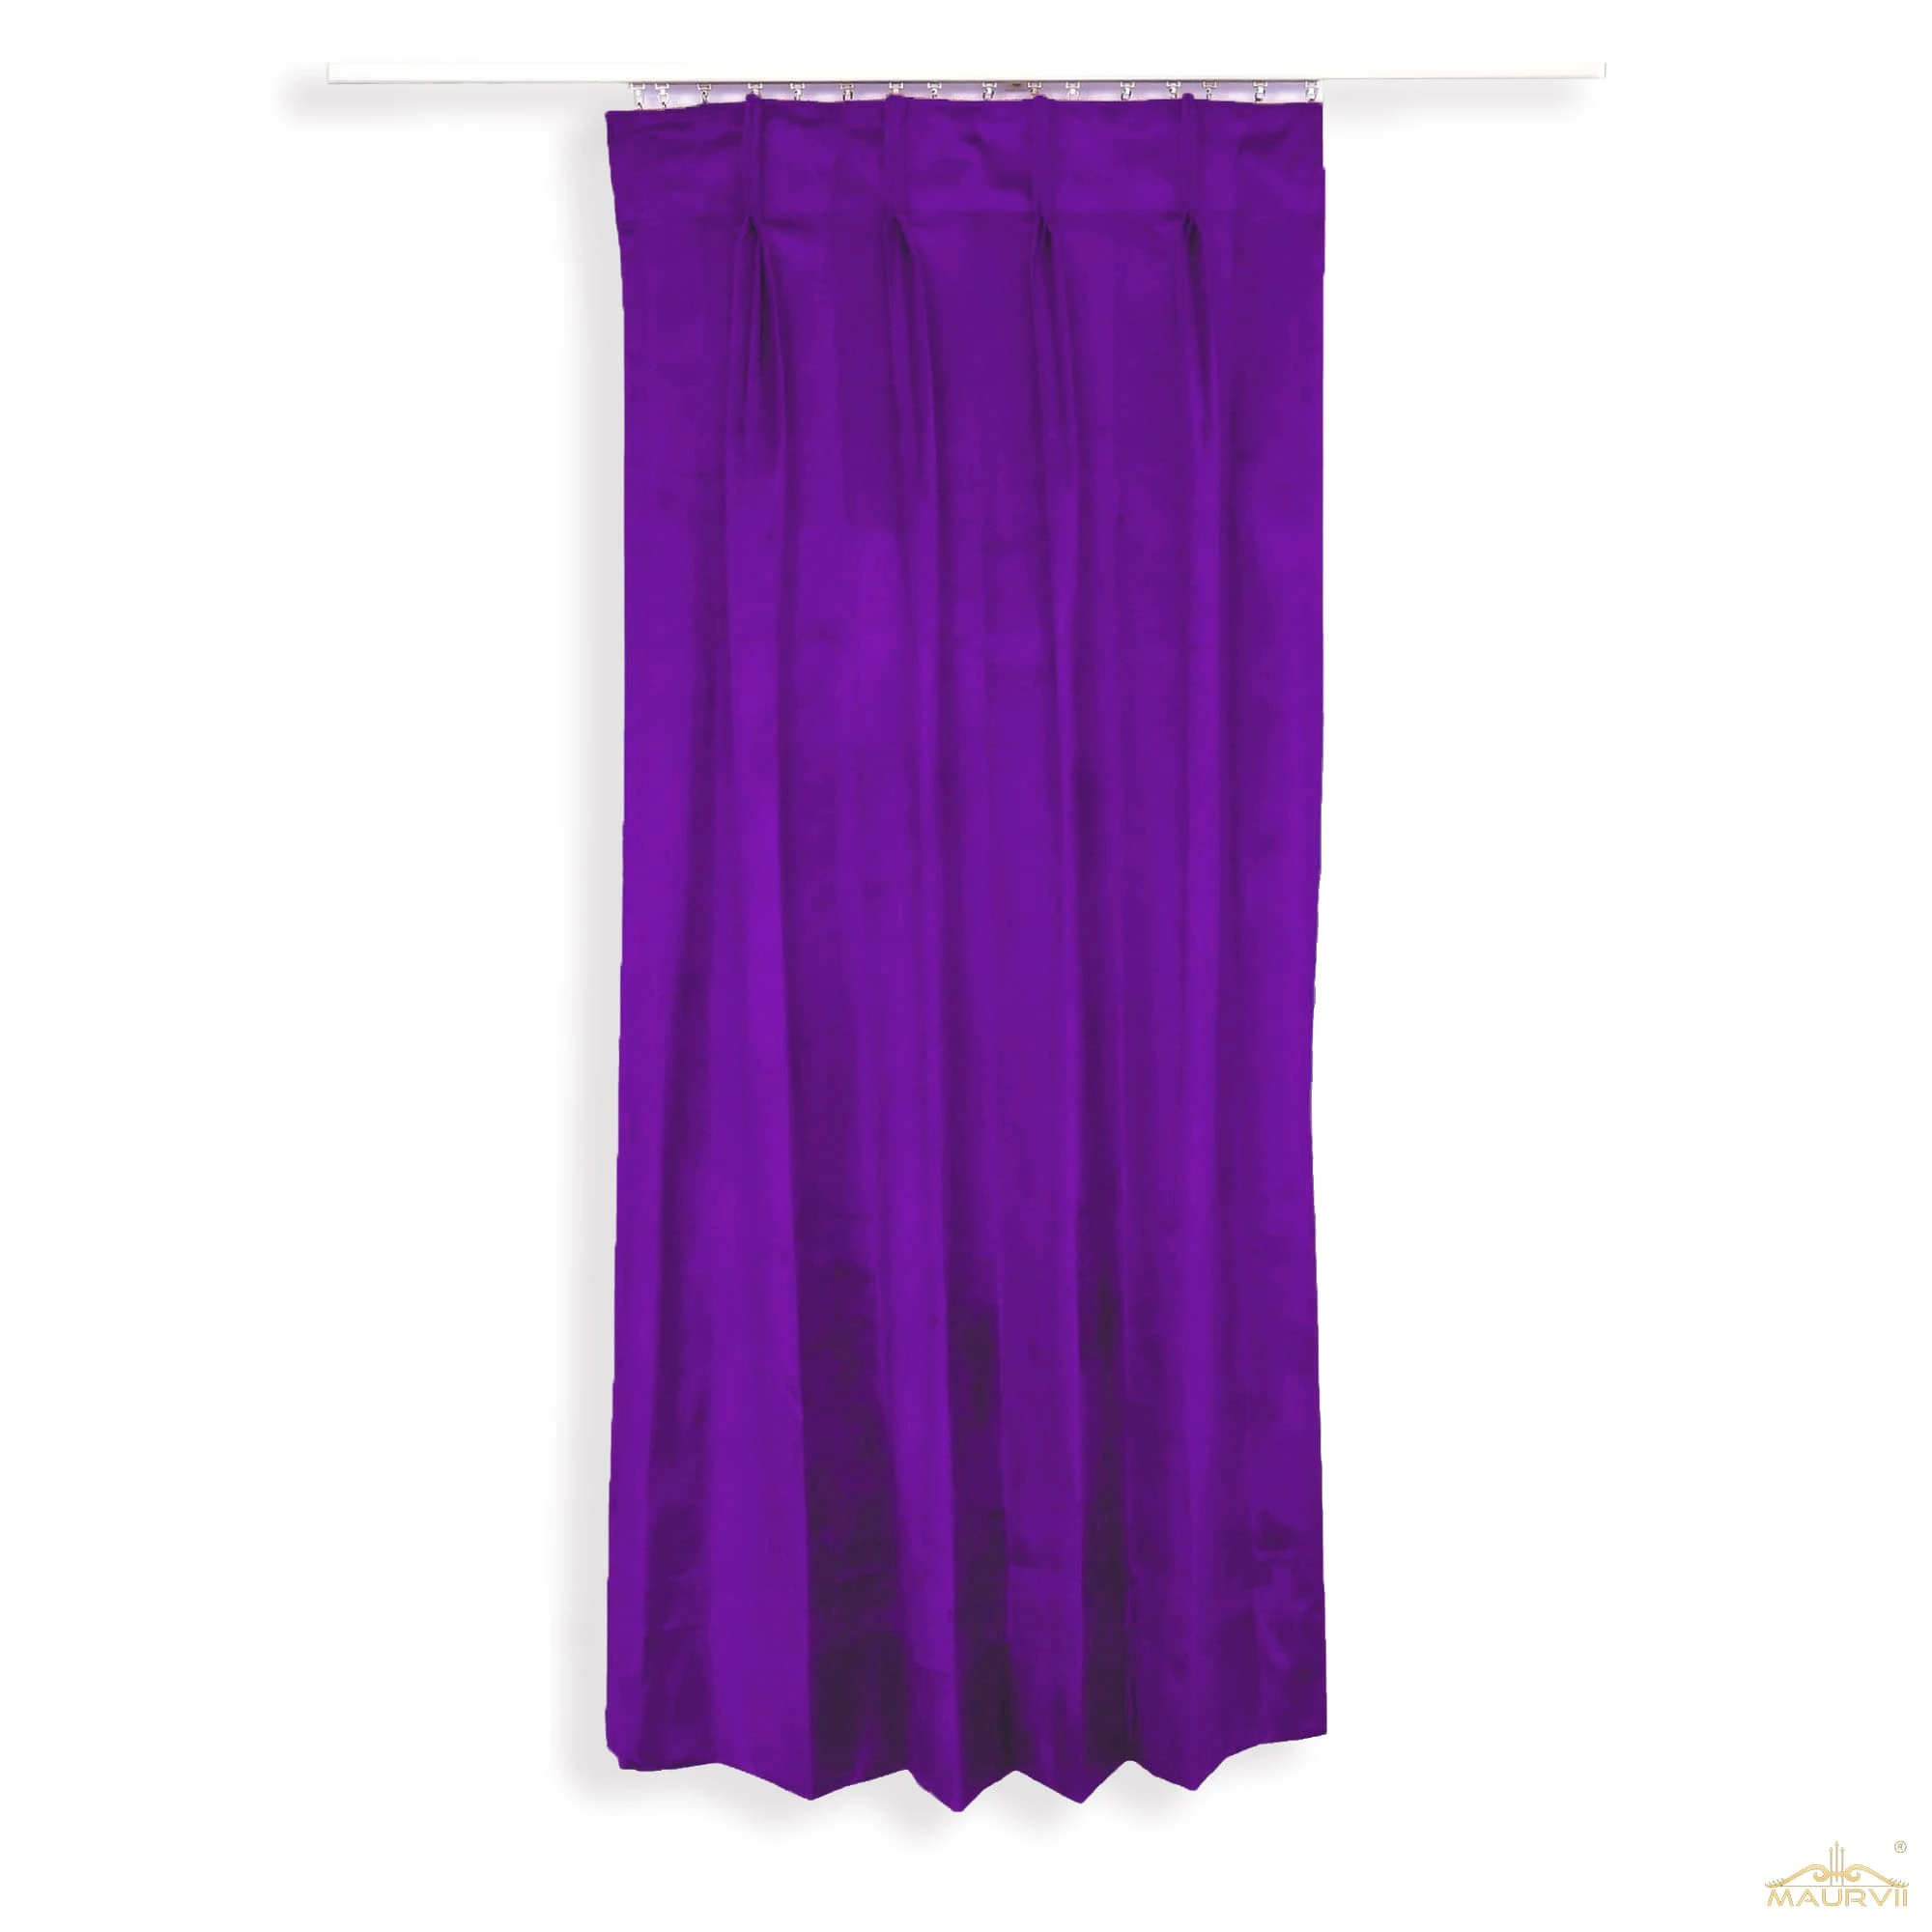 Purple theater curtains